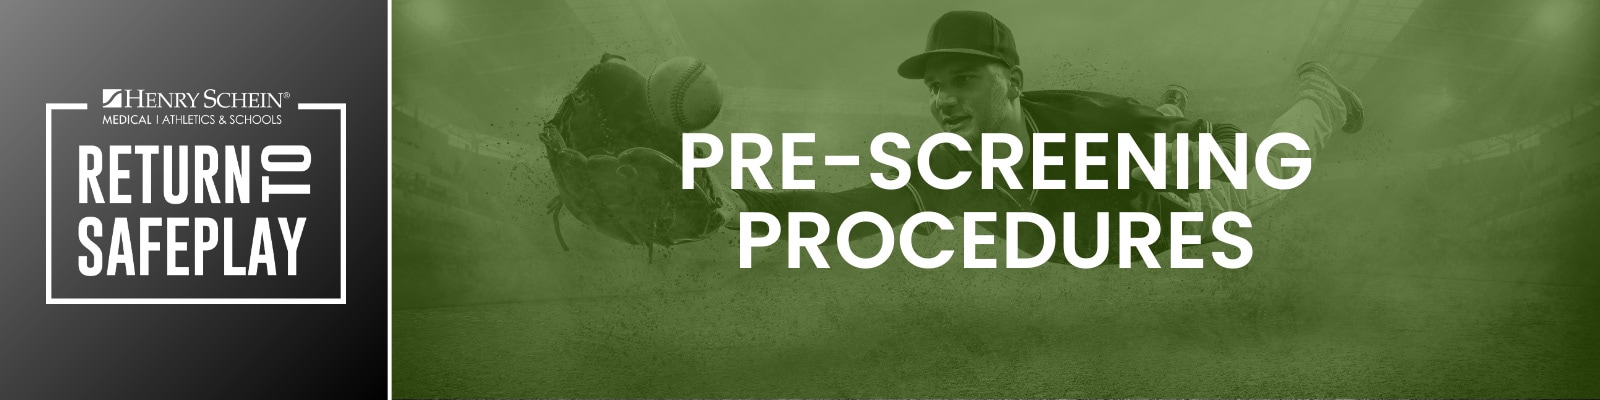 Pre-Screening Procedures for Athletes - Henry Schein Medical